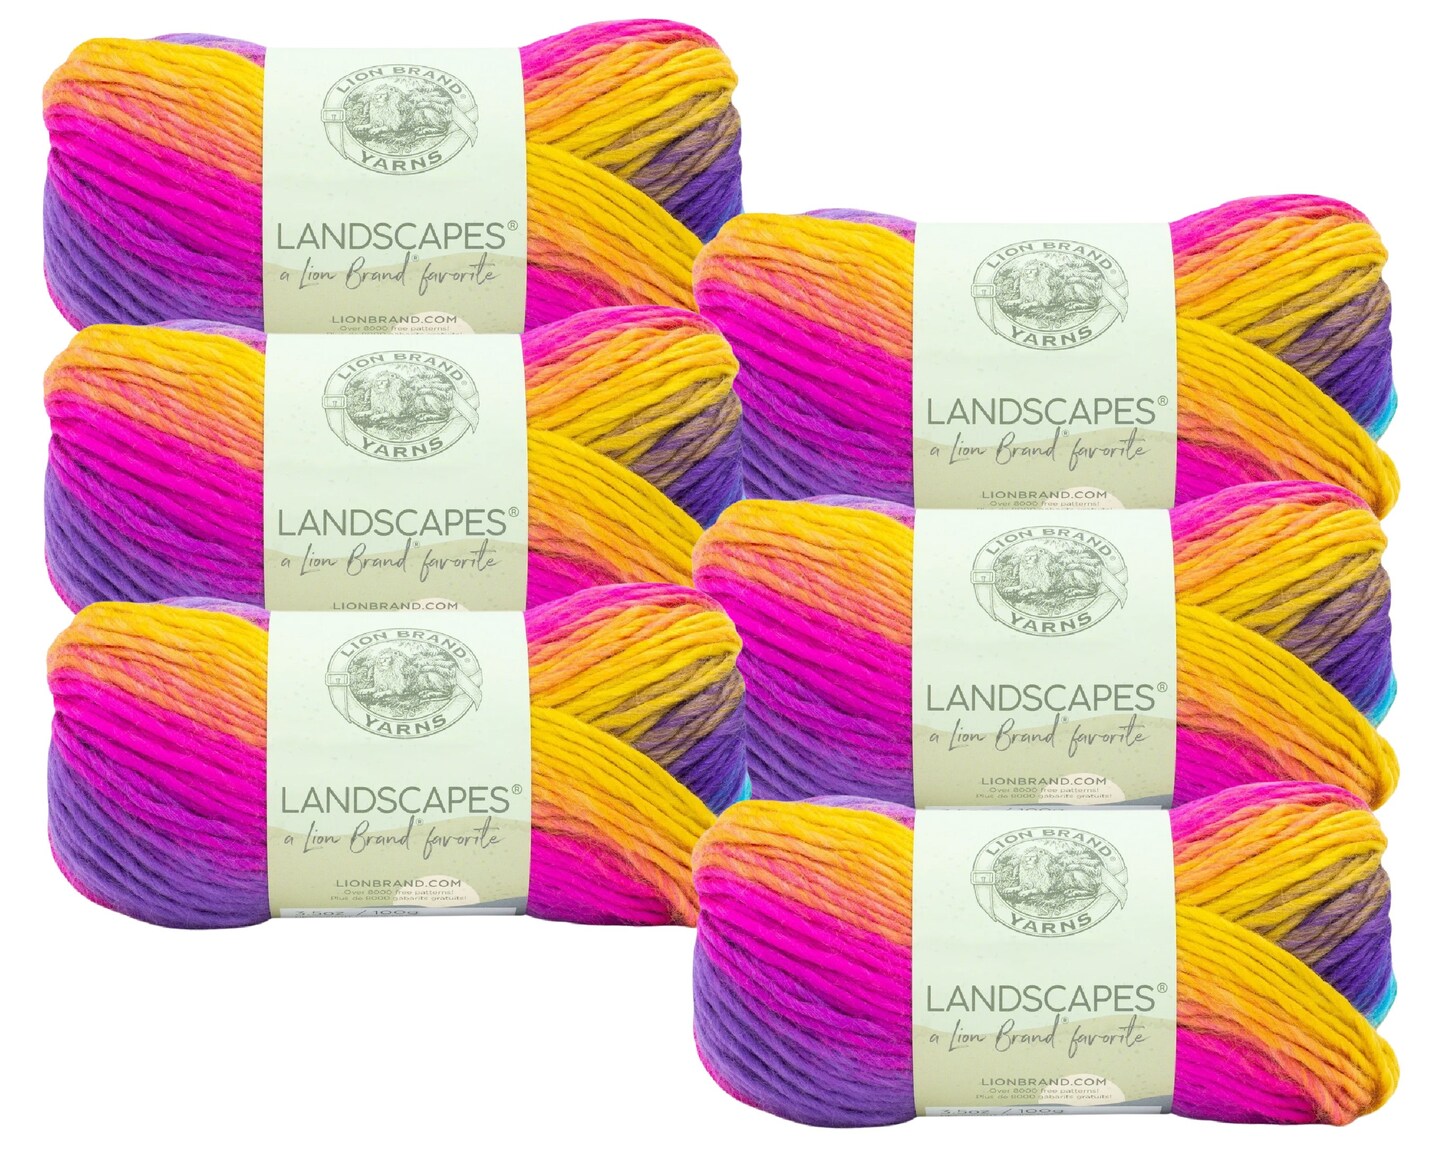 Lion Brand Yarn - Landscapes - 6 Pack Matching Dye Lot (Boardwalk)